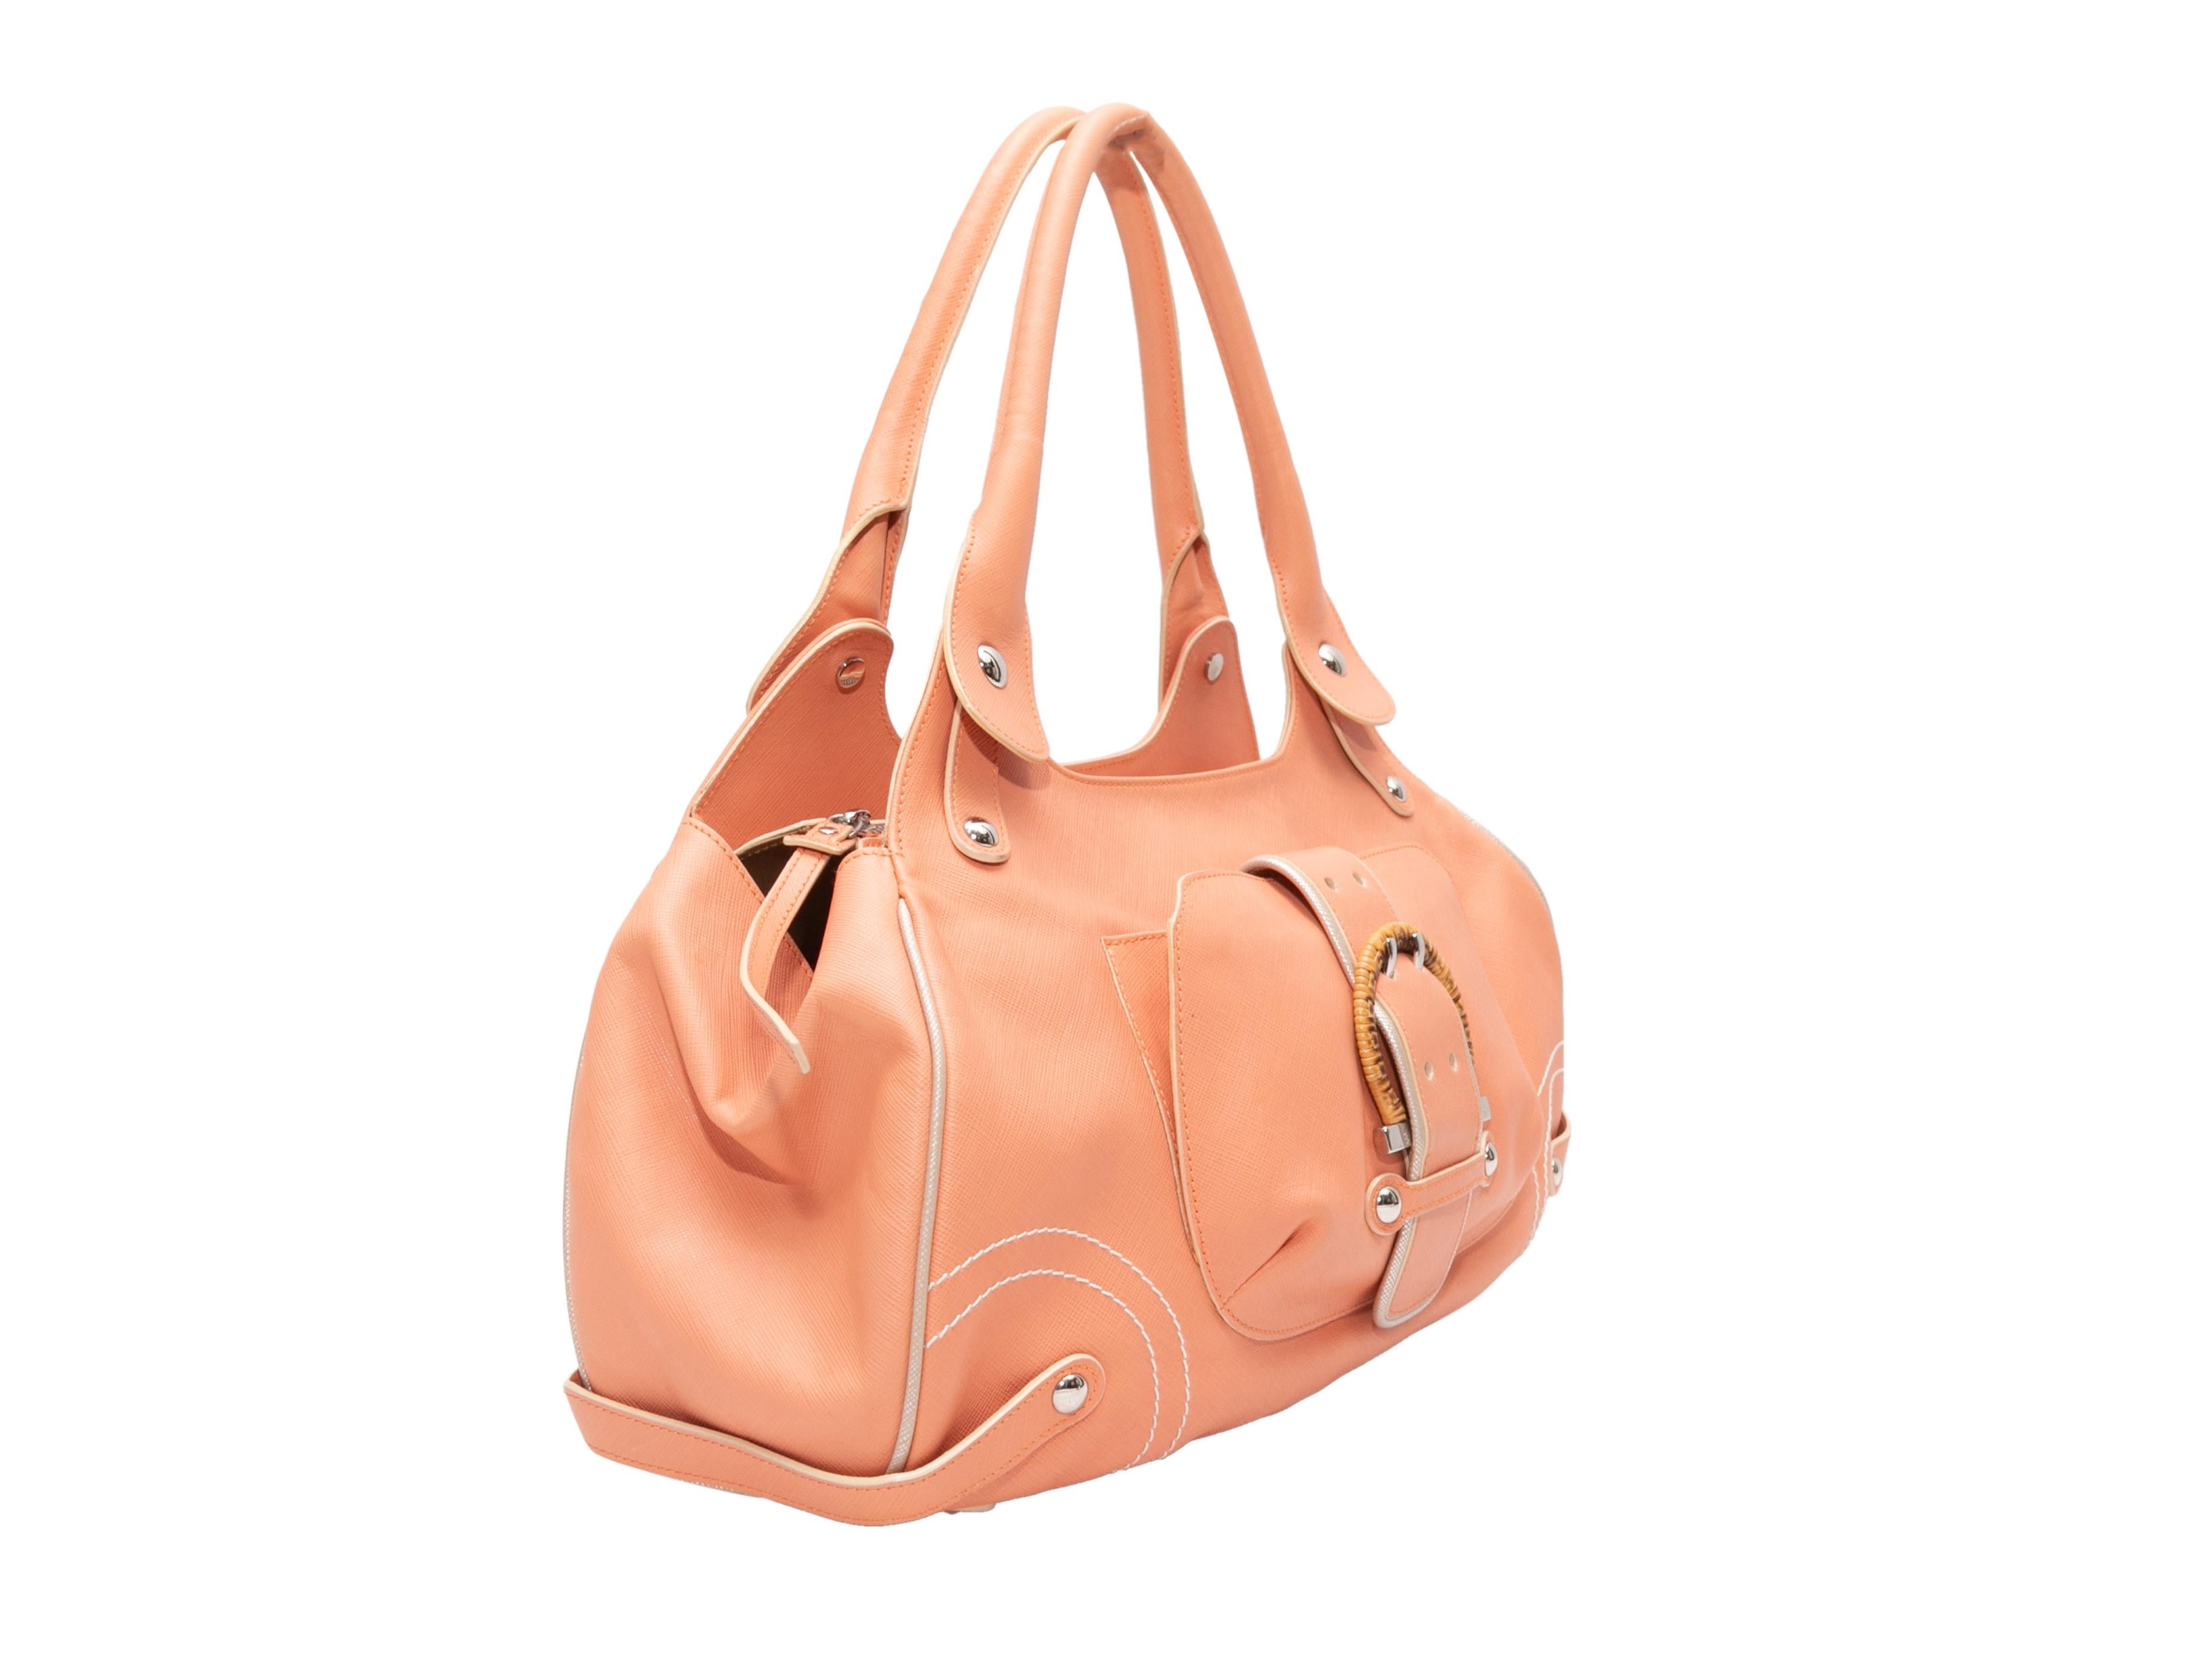 Peach Salvatore Ferragamo Shoulder Bag In Good Condition For Sale In New York, NY